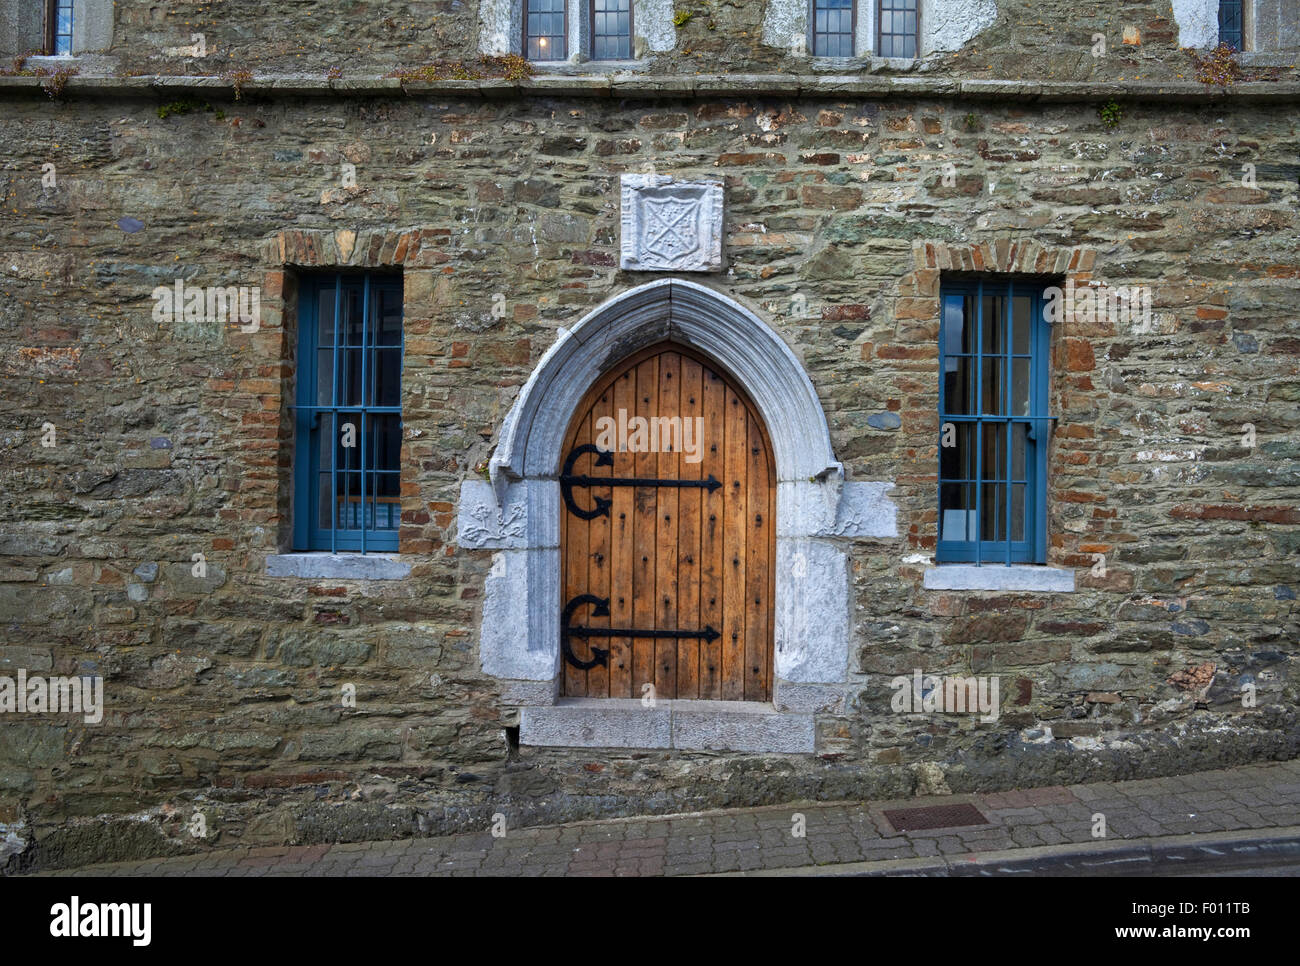 Originally  built as the Customs House, the 15th Century Desmond Castle & International Museum of Wine, Cork Street, Kinsale, County Cork, Ireland Stock Photo